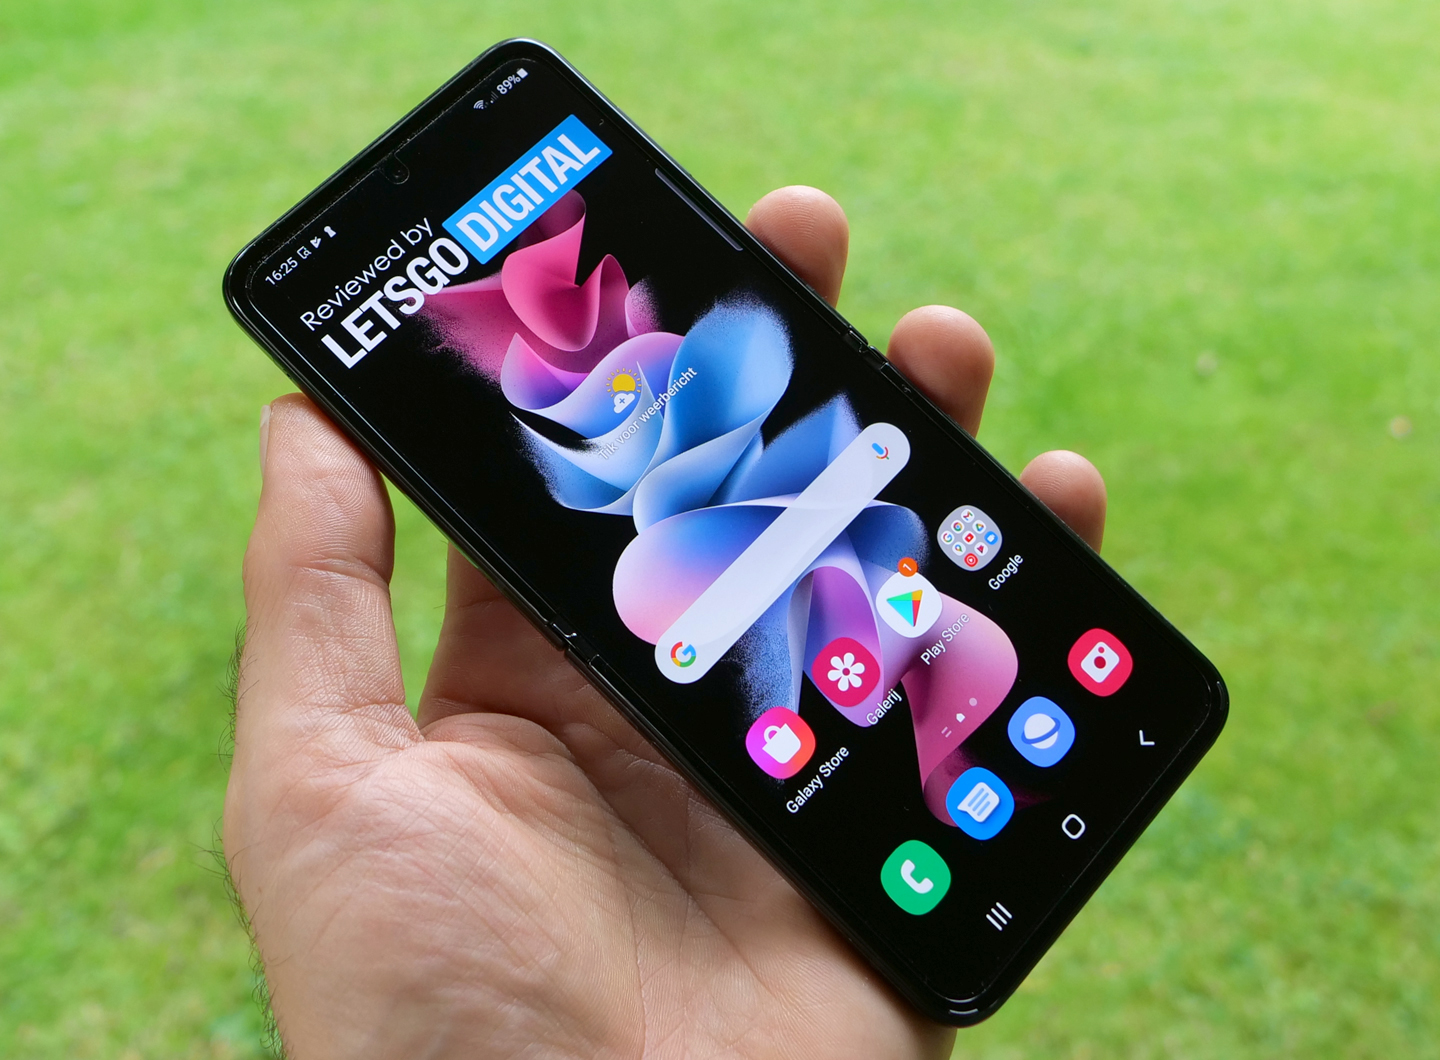 Samsung Galaxy Z Flip review